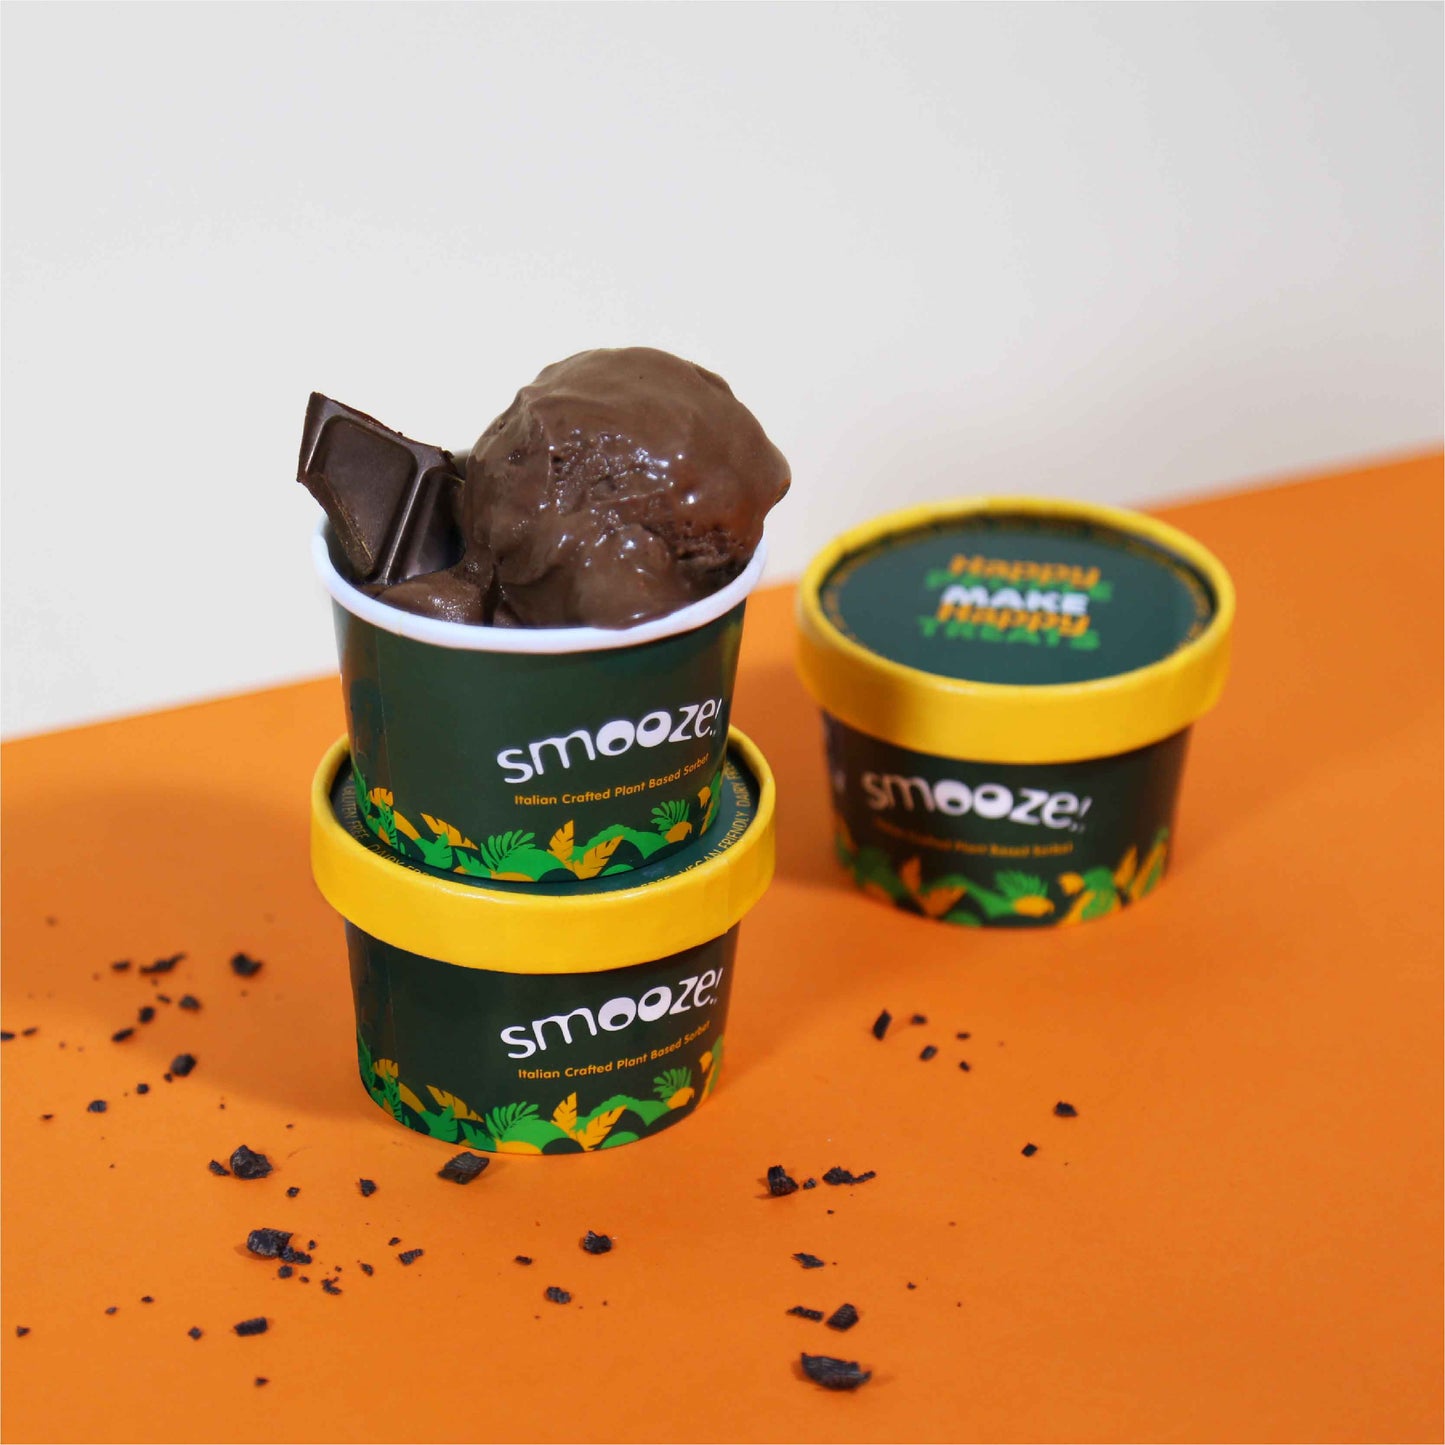 Smooze!™ Chocolate Sorbetto - Italian Crafted Plant-Based Sorbet (2 Tubs)